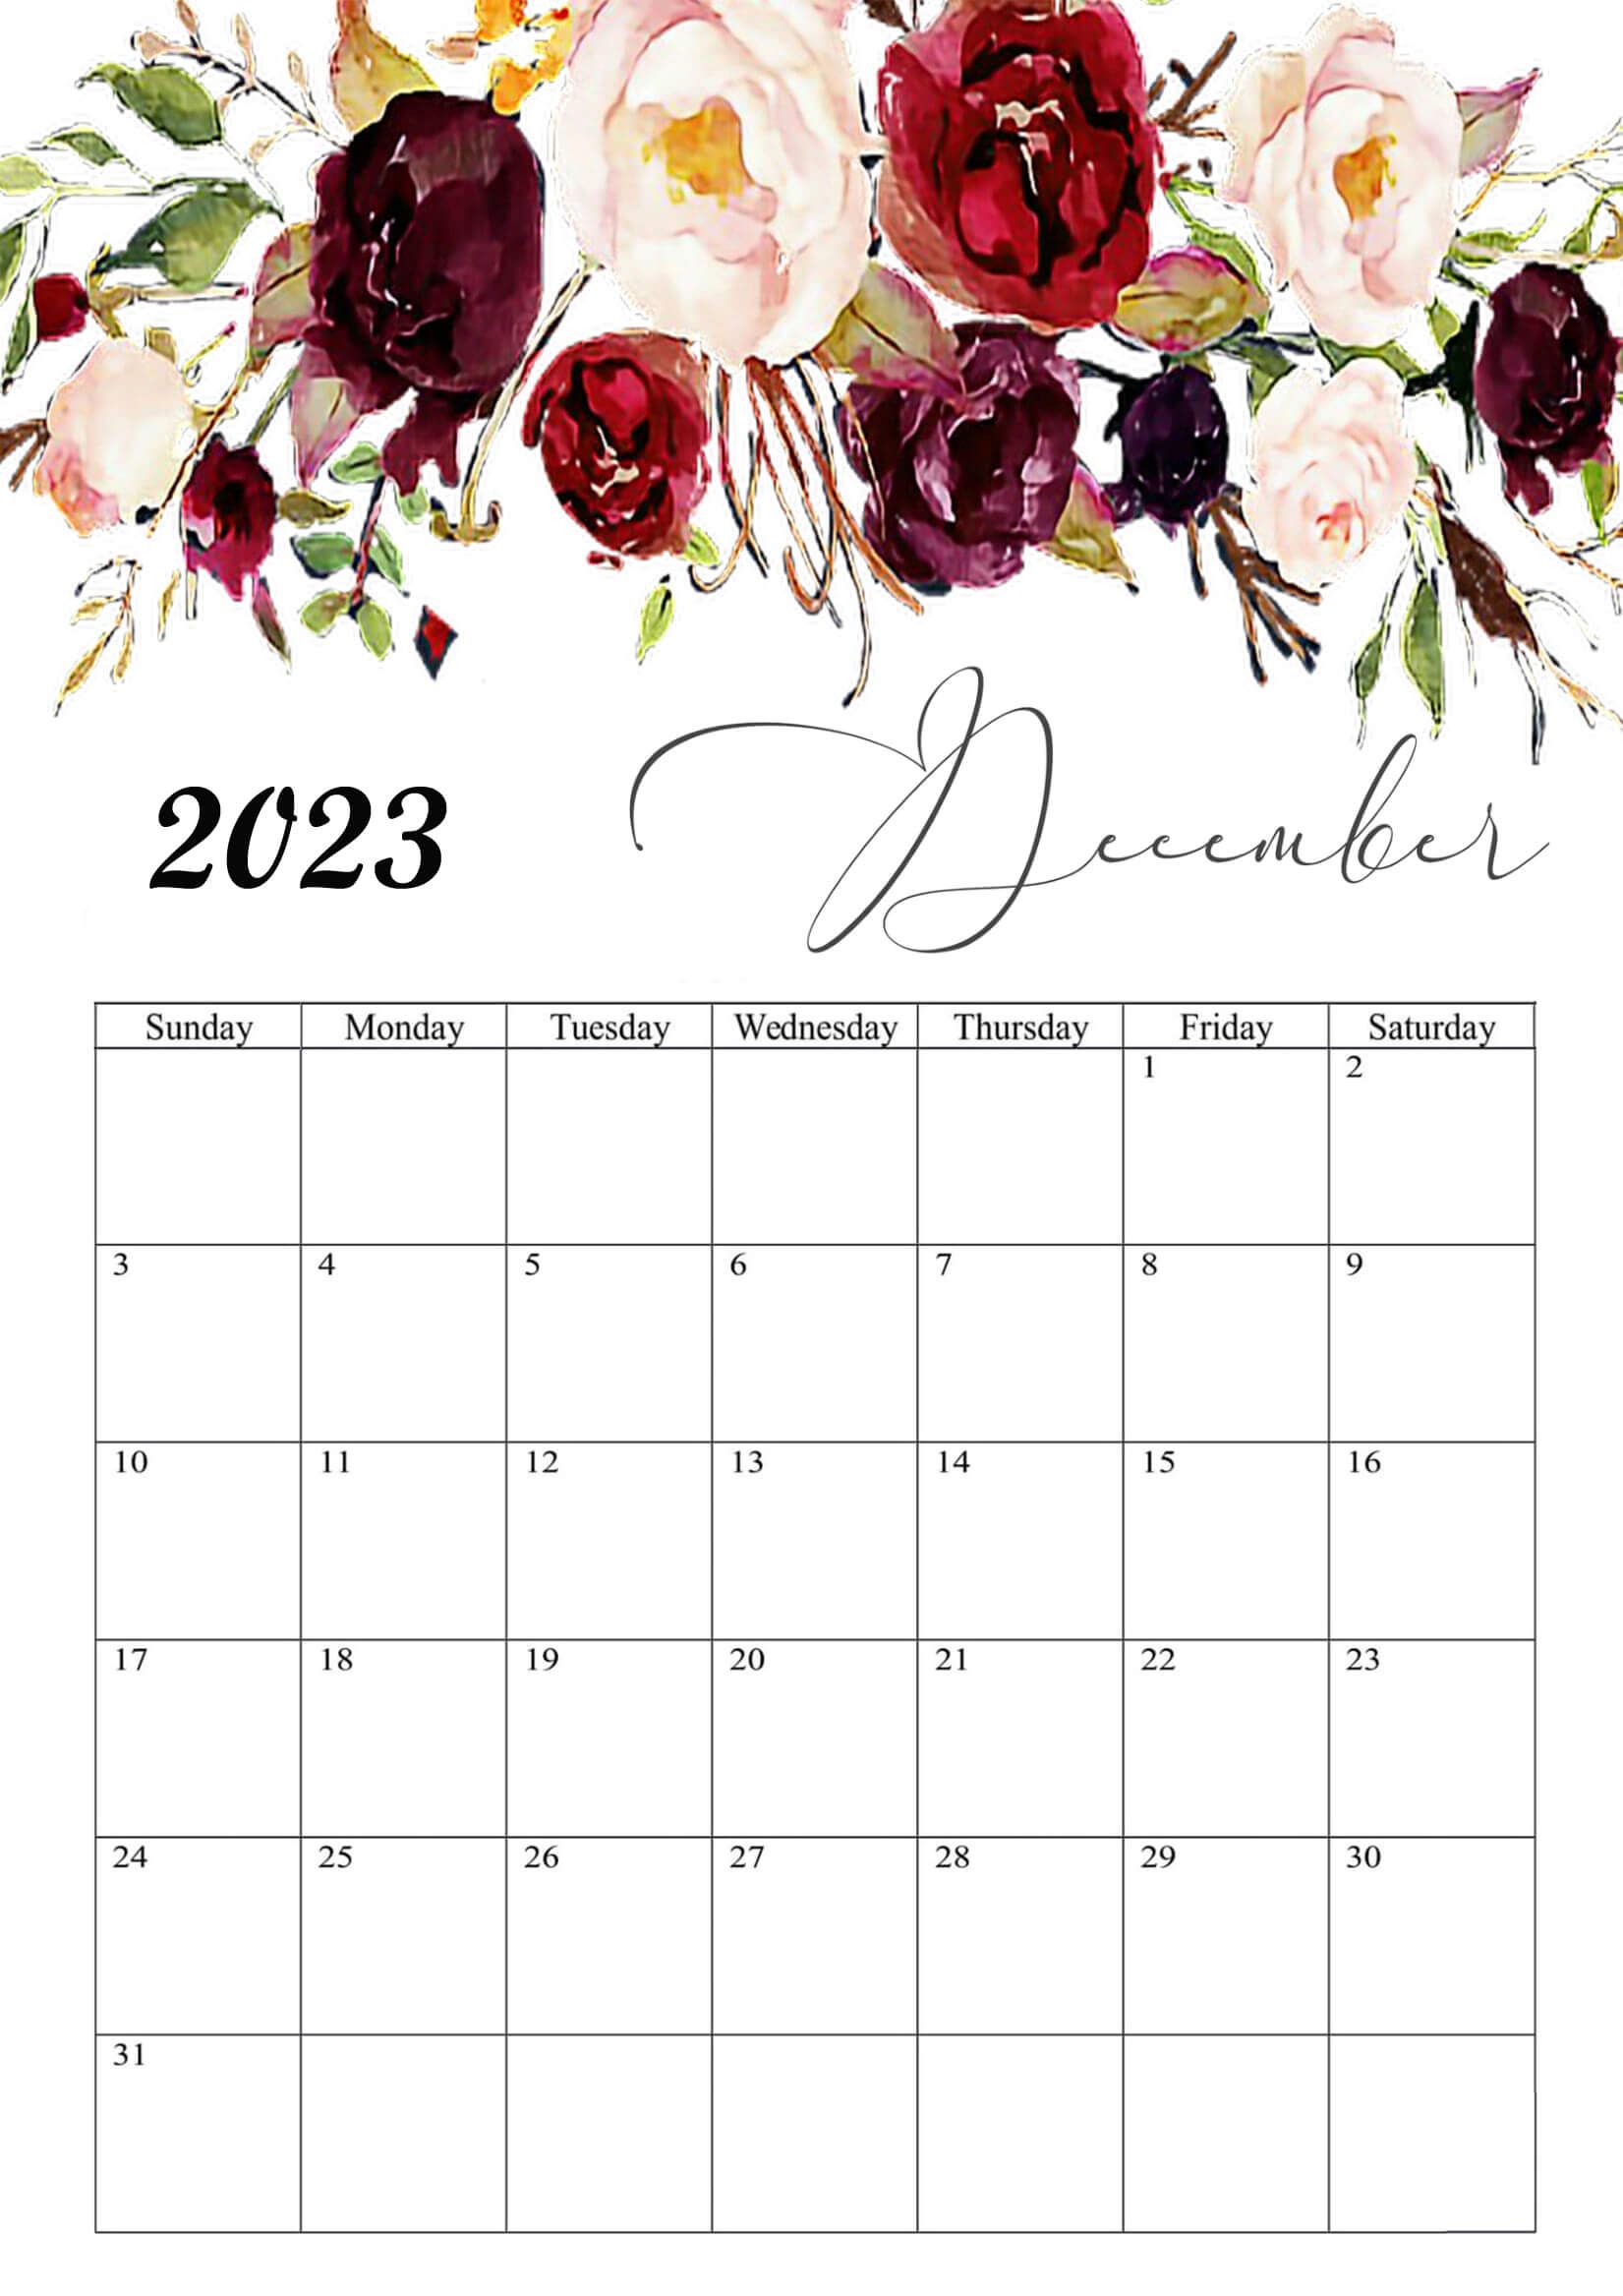 December 2023 Calendar Floral